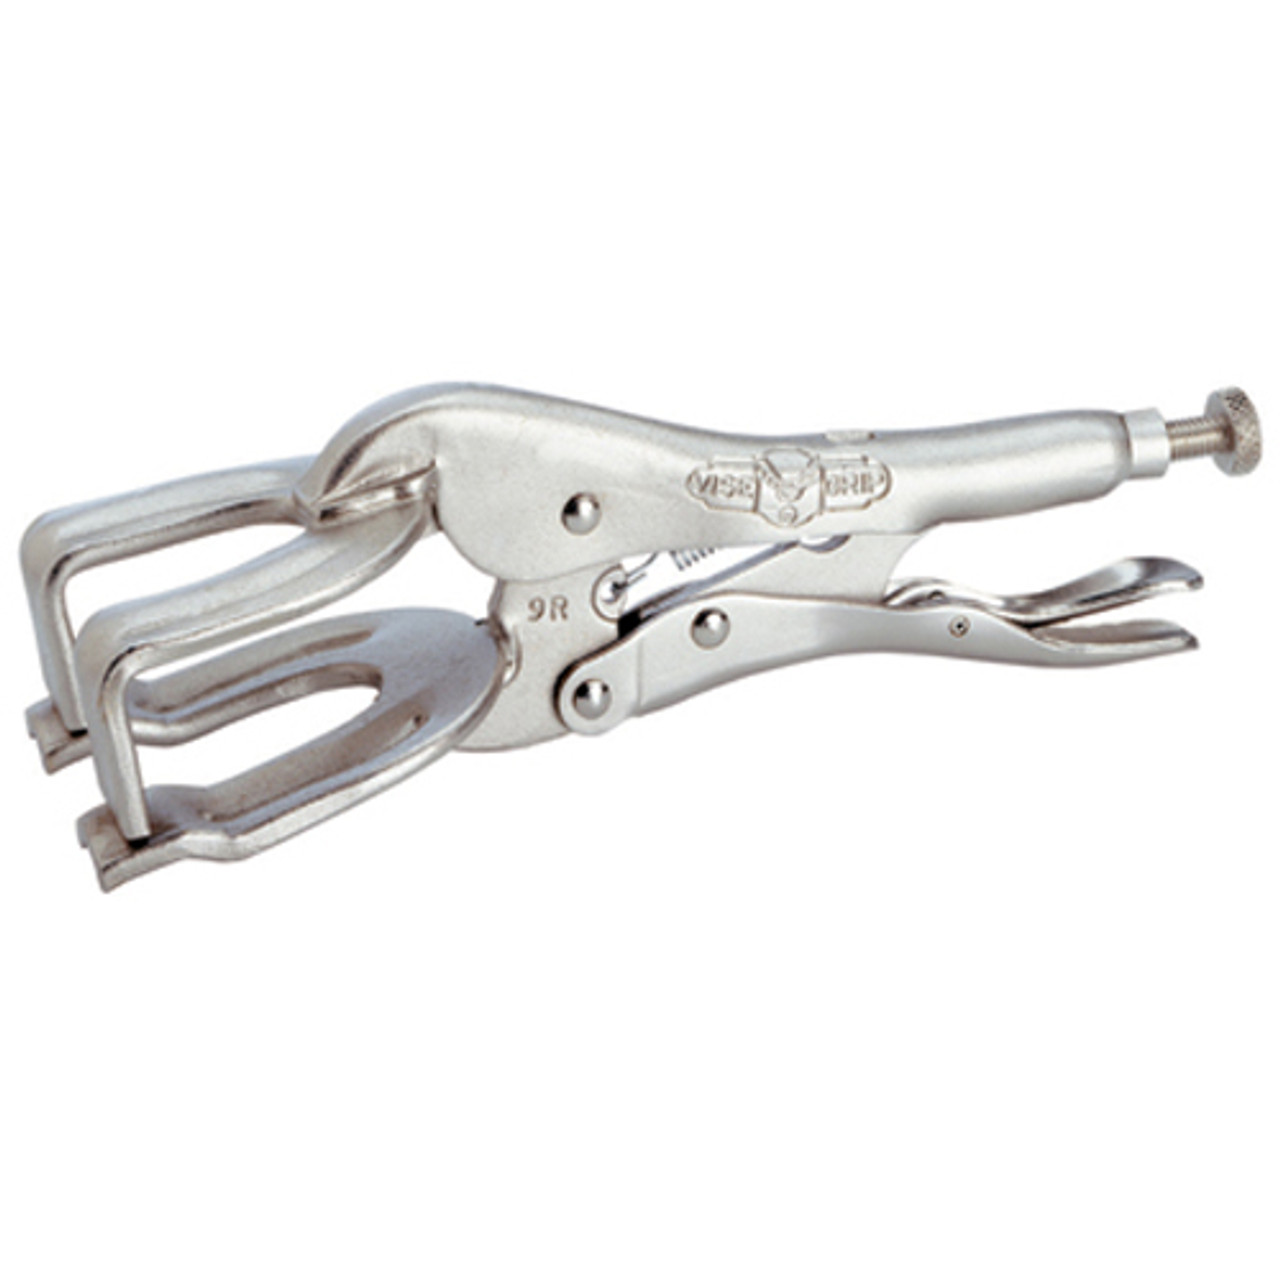 vise grip locking welding clamp